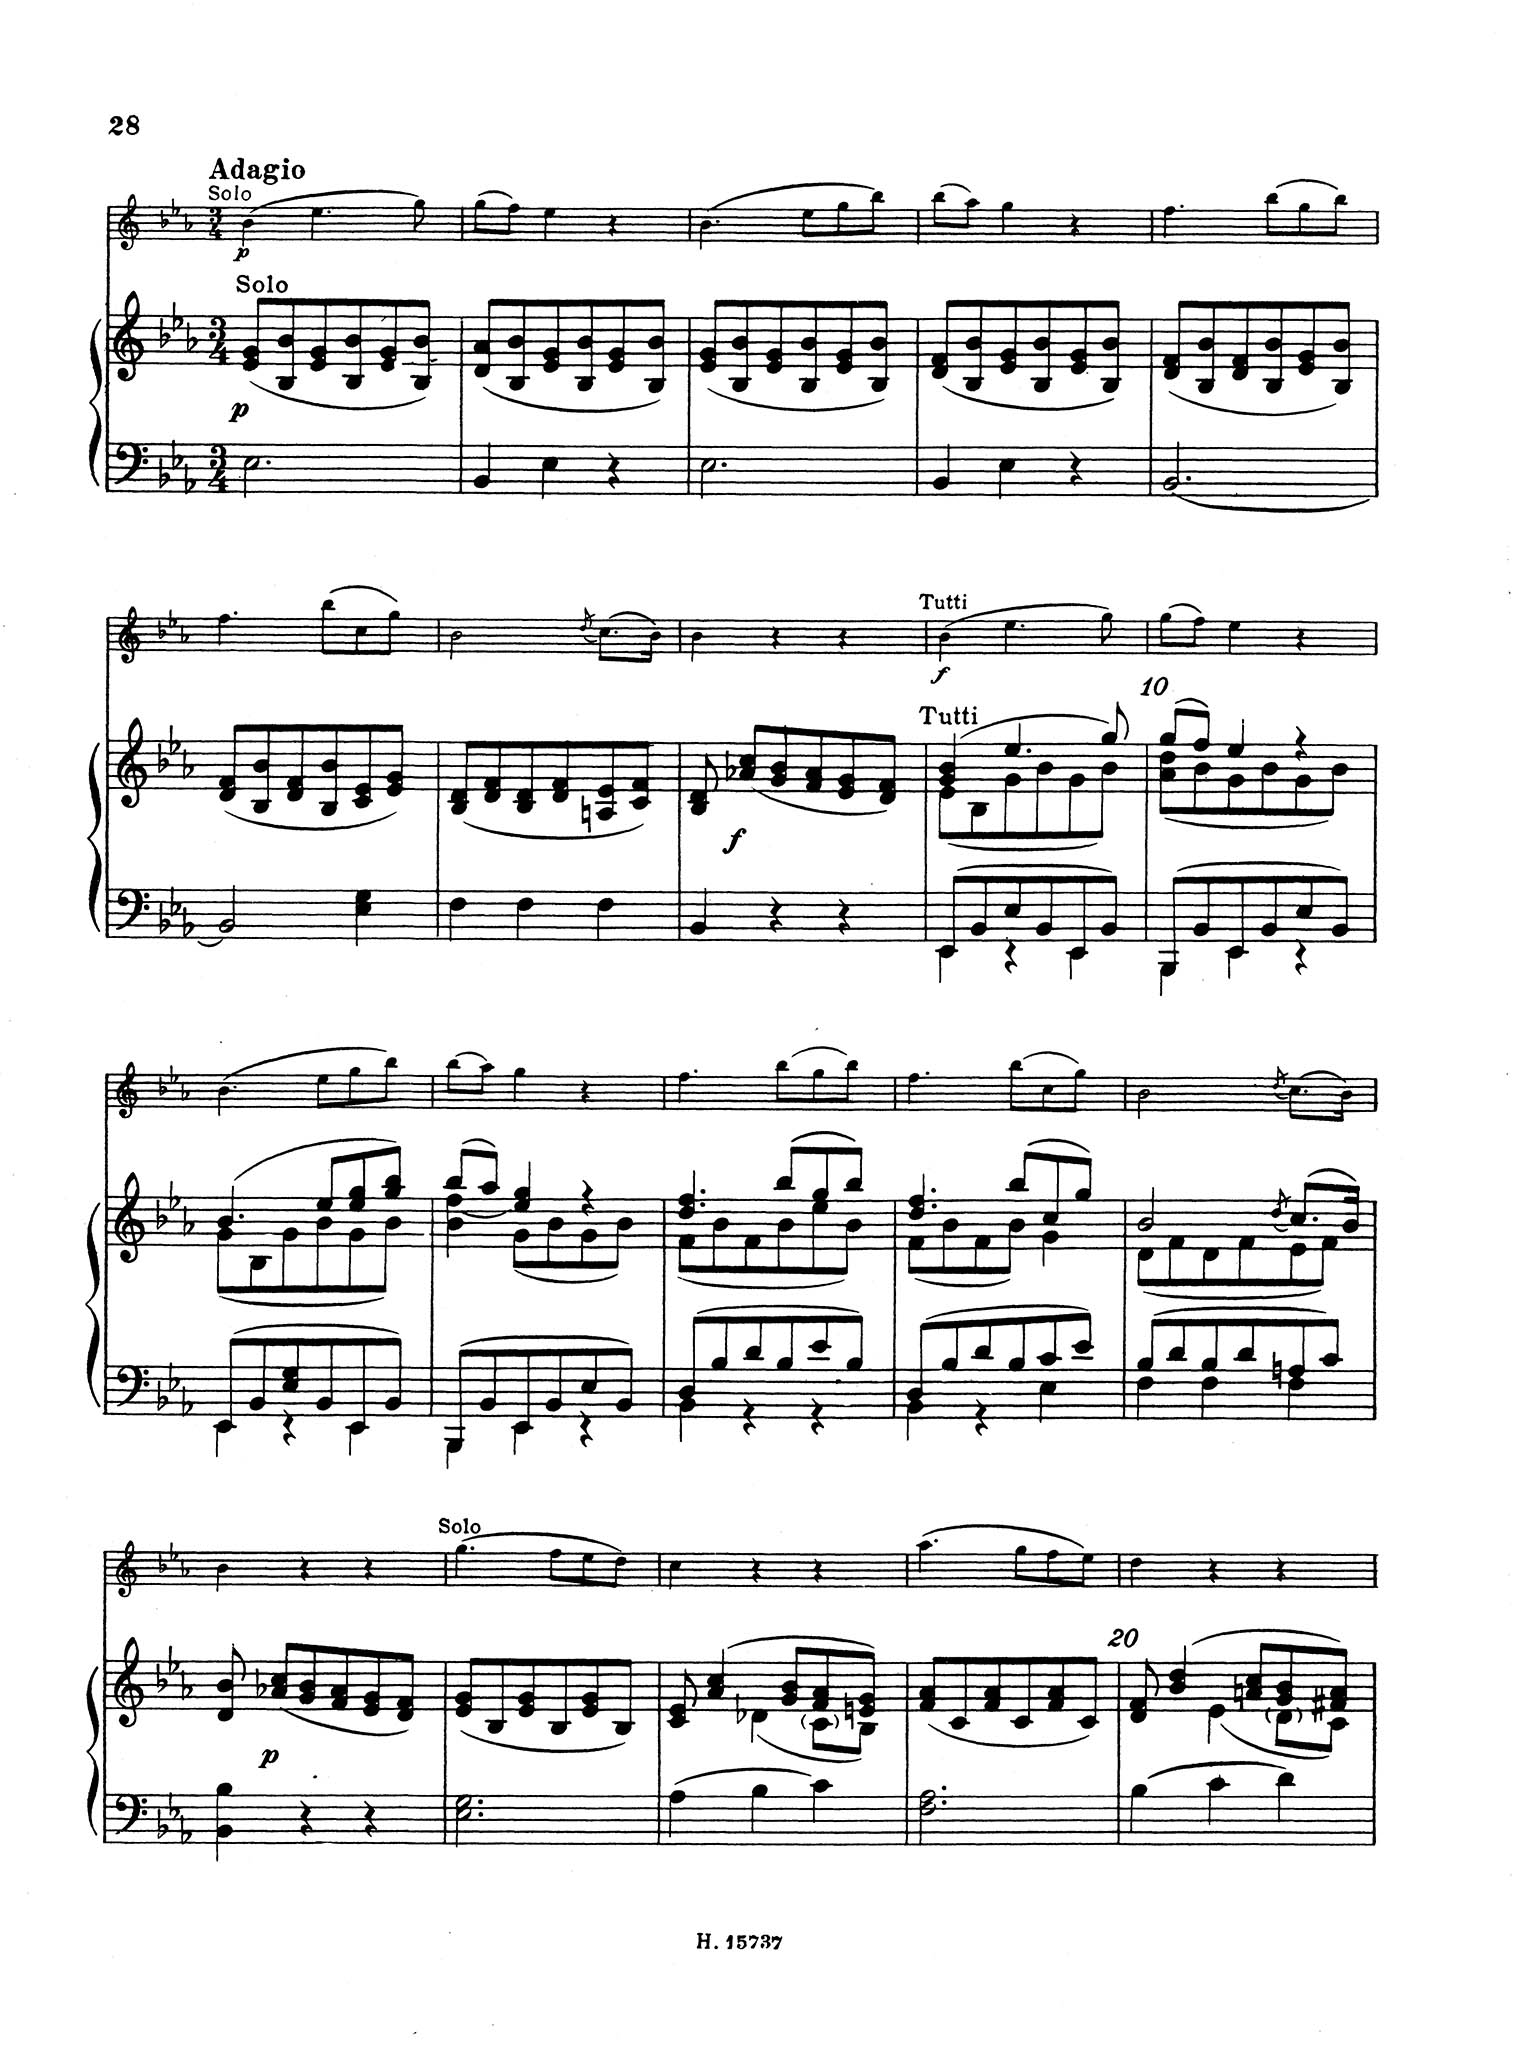  Clarinet Concerto in A Major, K. 622 - Movement 2